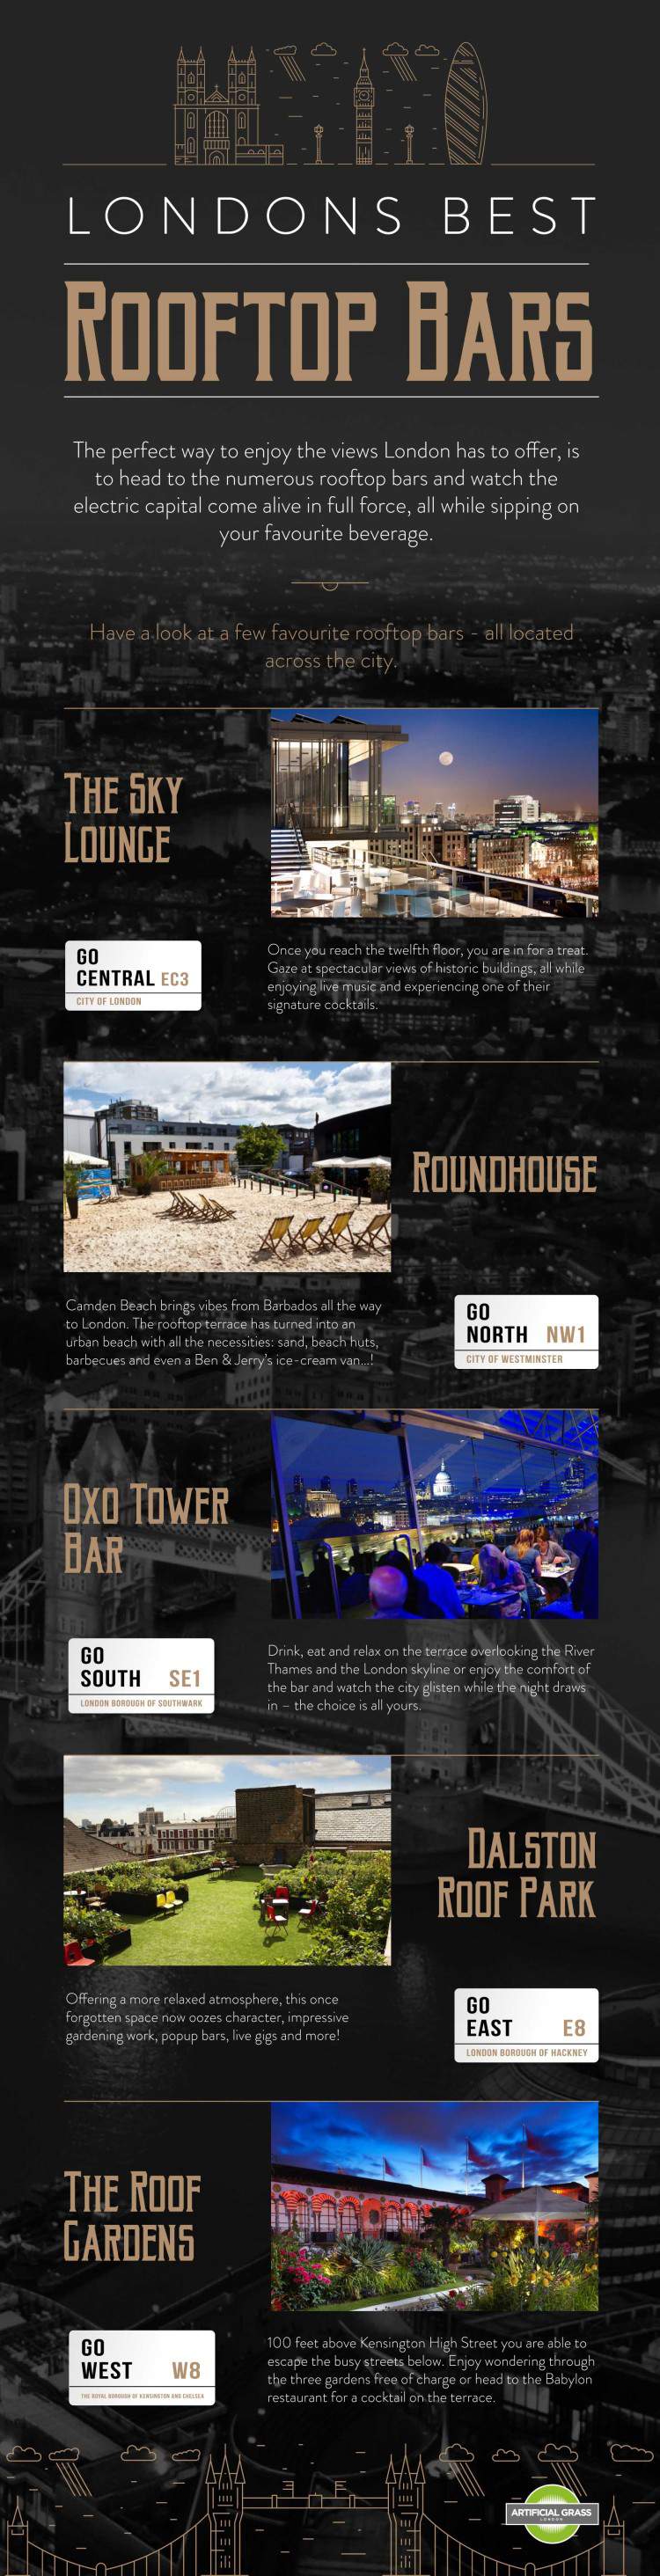 London’s Best Rooftop Bars